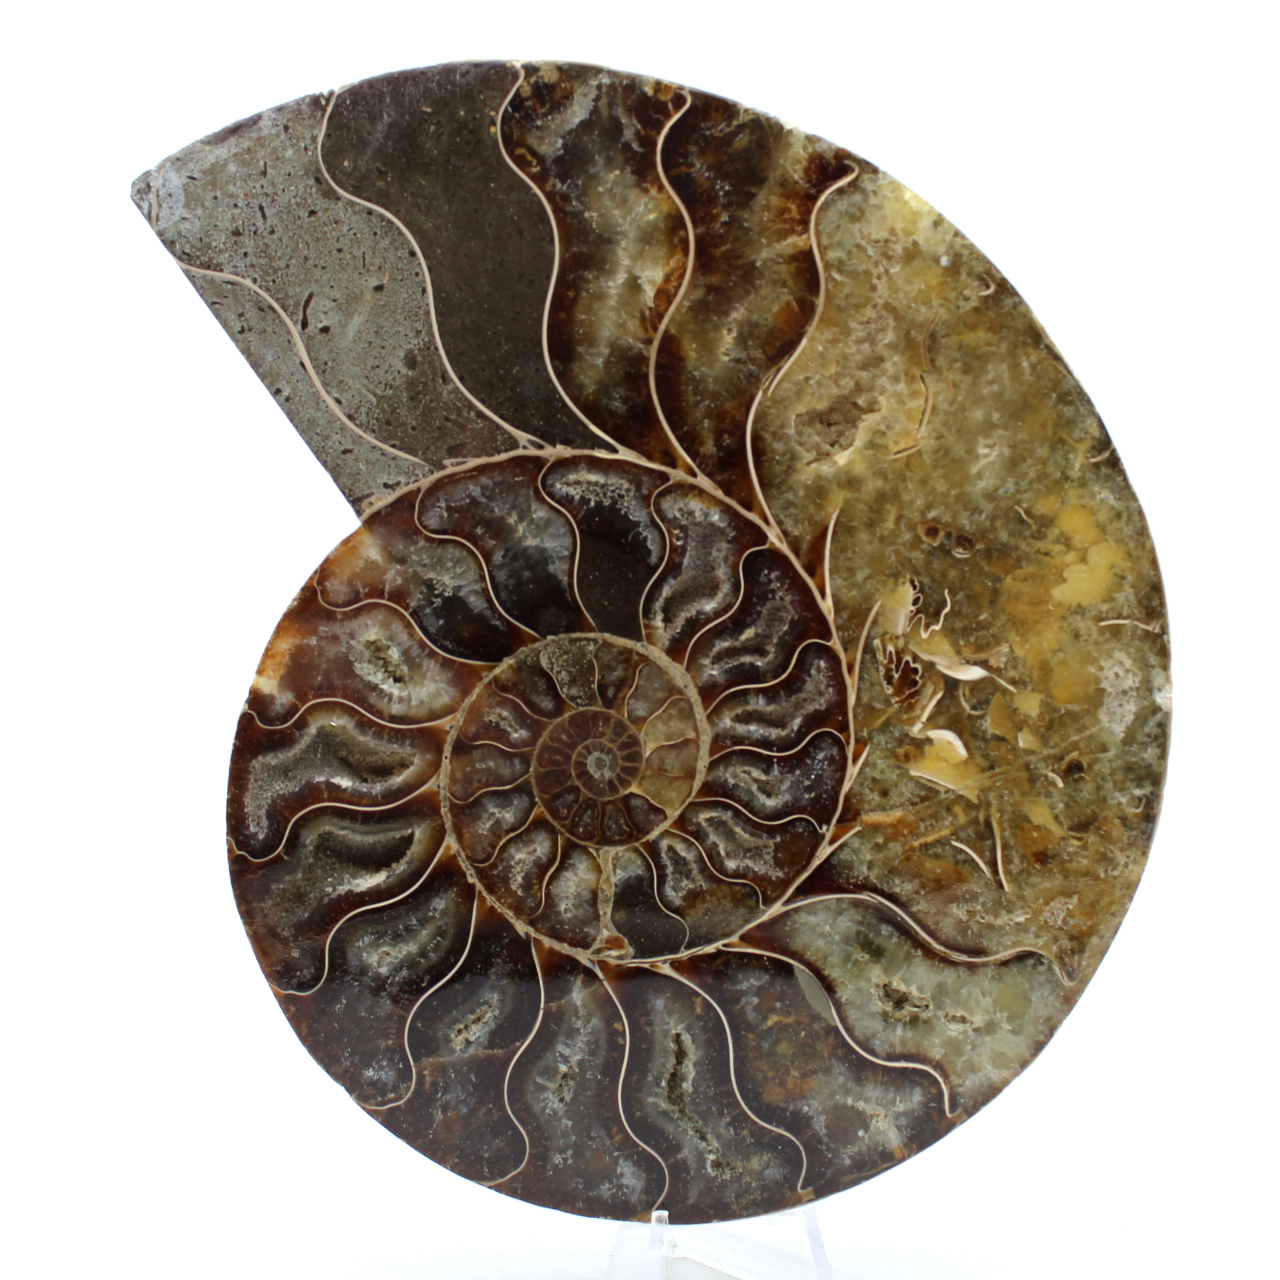 One piece ammonite fossil